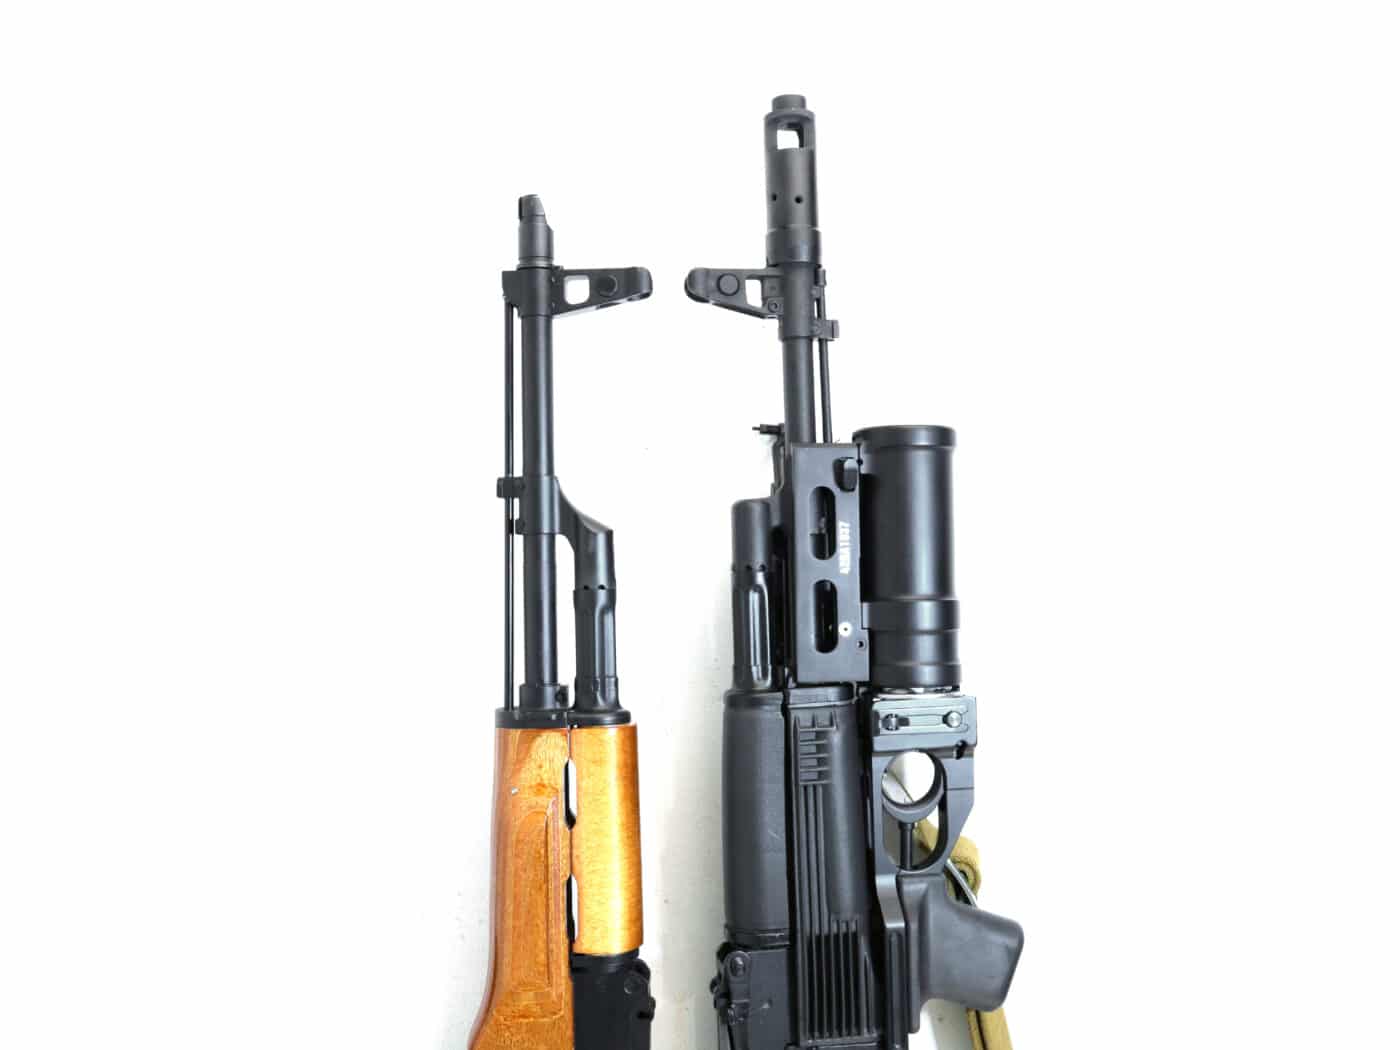 Muzzle brake on the AK-74M (right) vs. brake on the AKM (left)